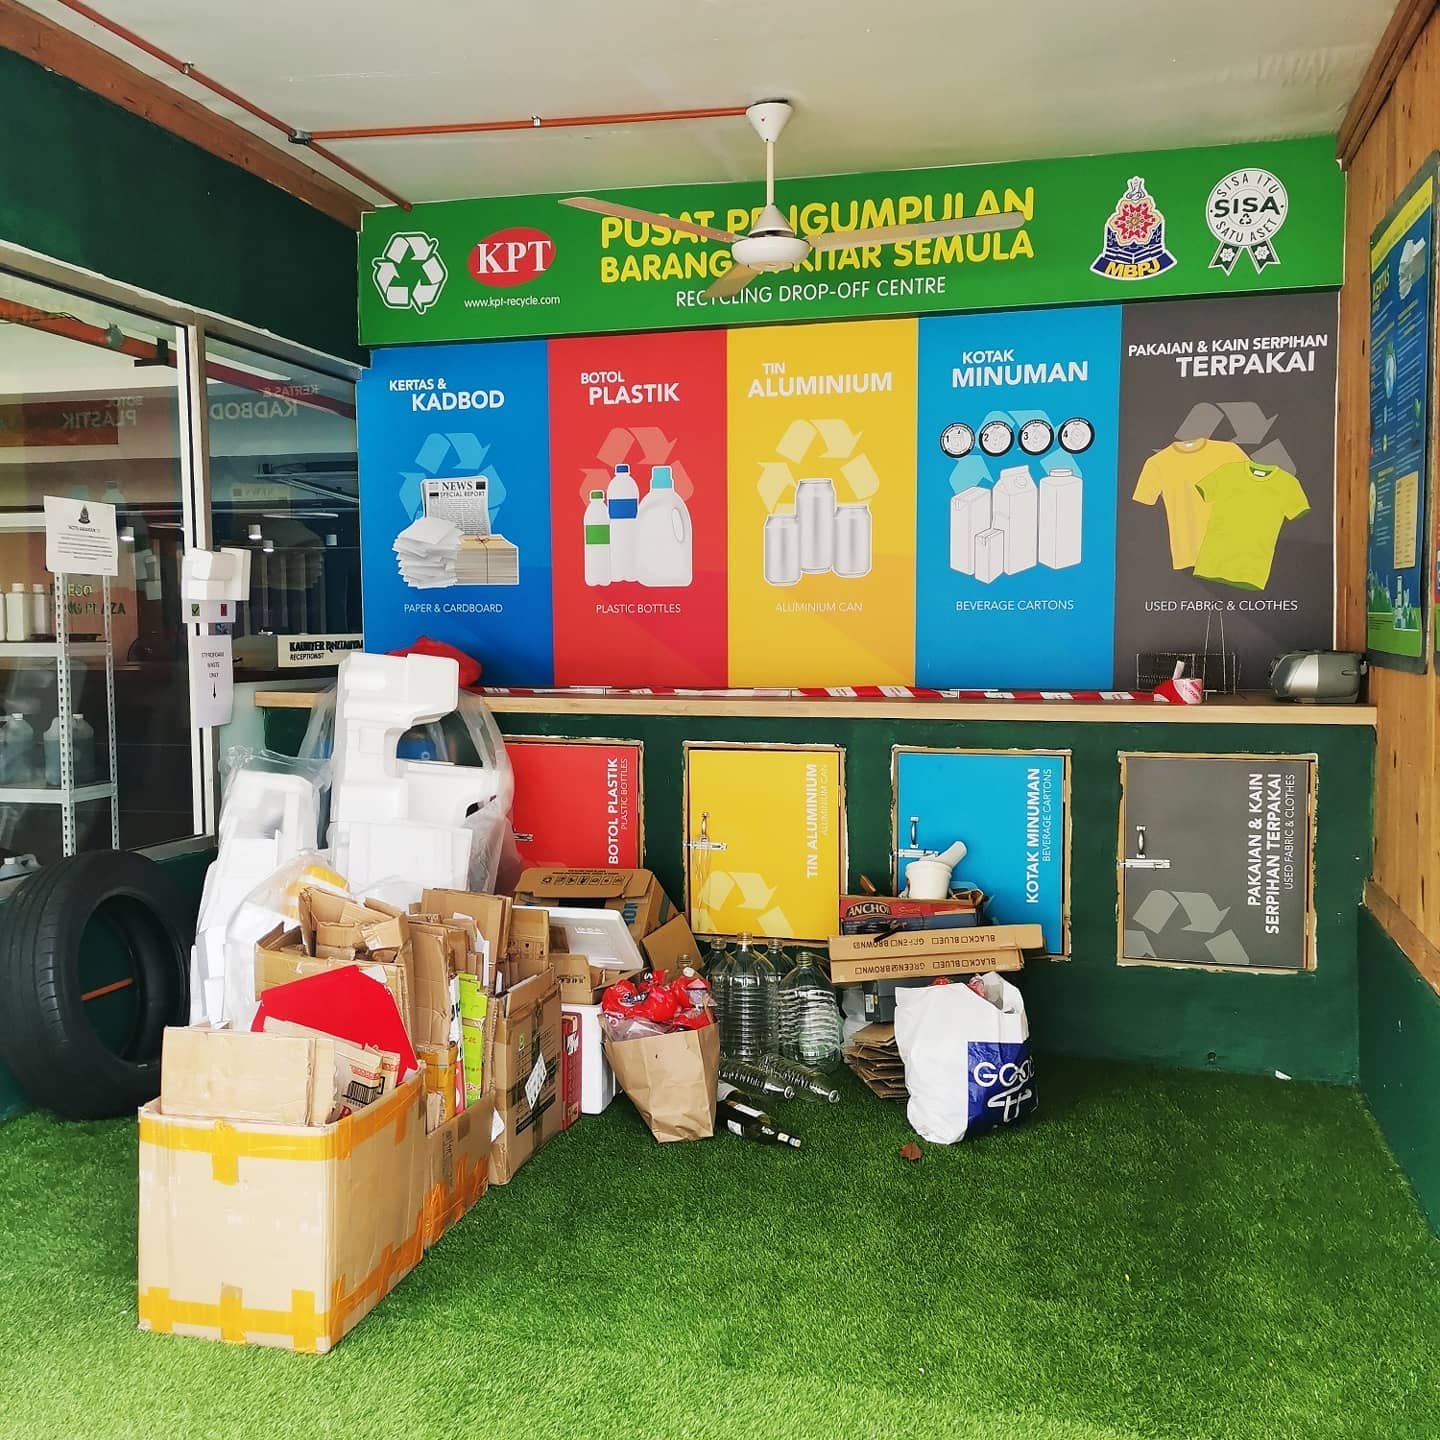 PJ Eco Recycling Plaza Recycling Drop-Off Centre, Pusat Pengumpulan Barangan Kitar Semula